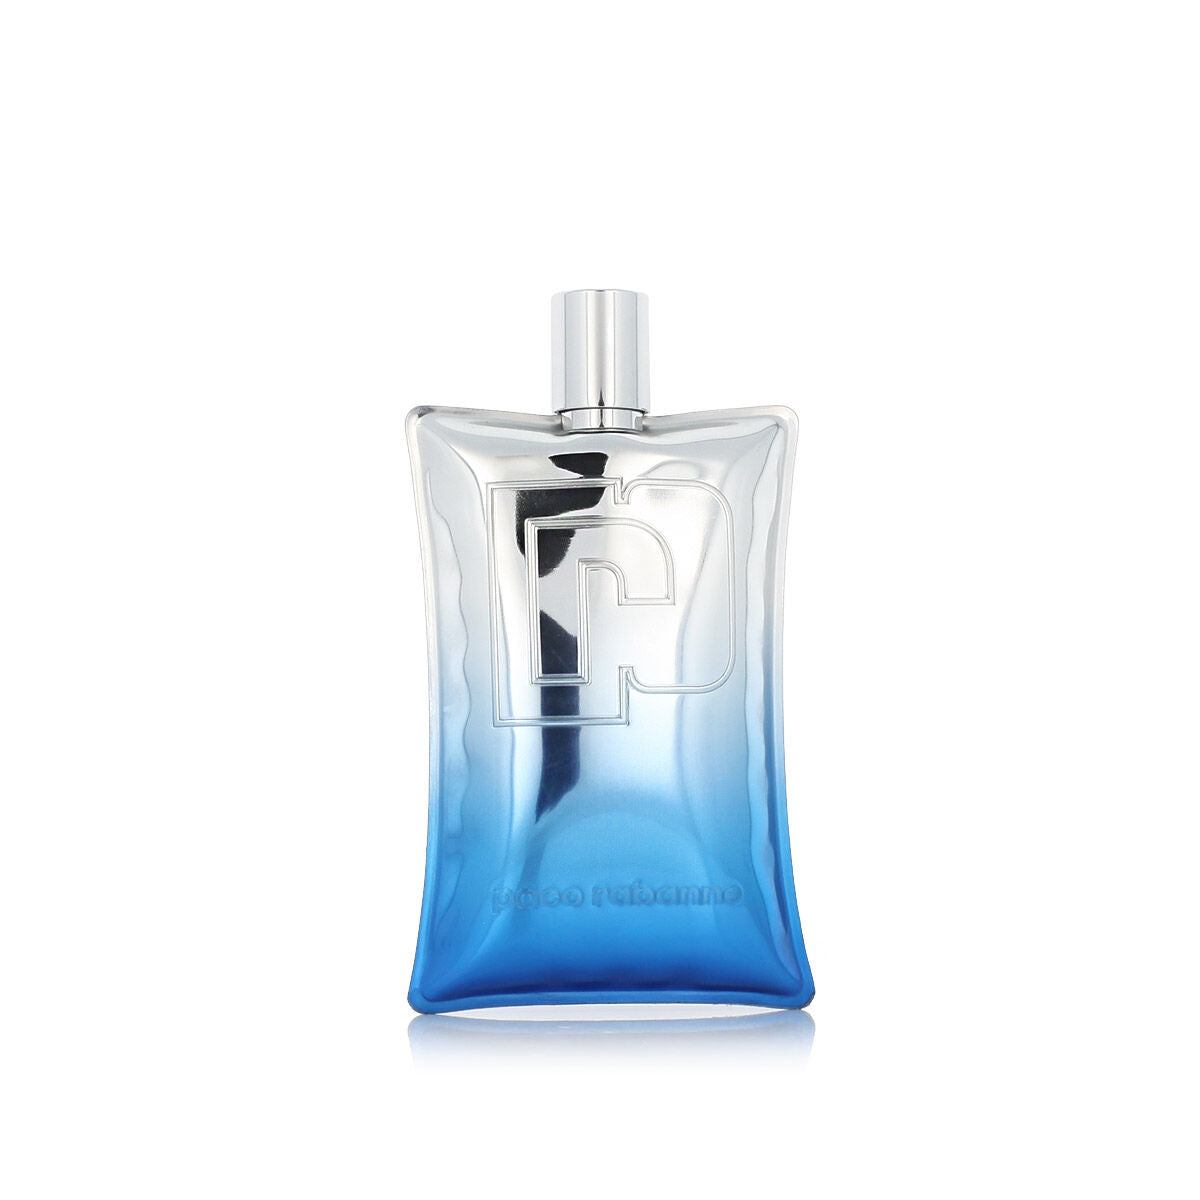 Perfume Unisex Paco Rabanne EDP Genius Me 62 ml